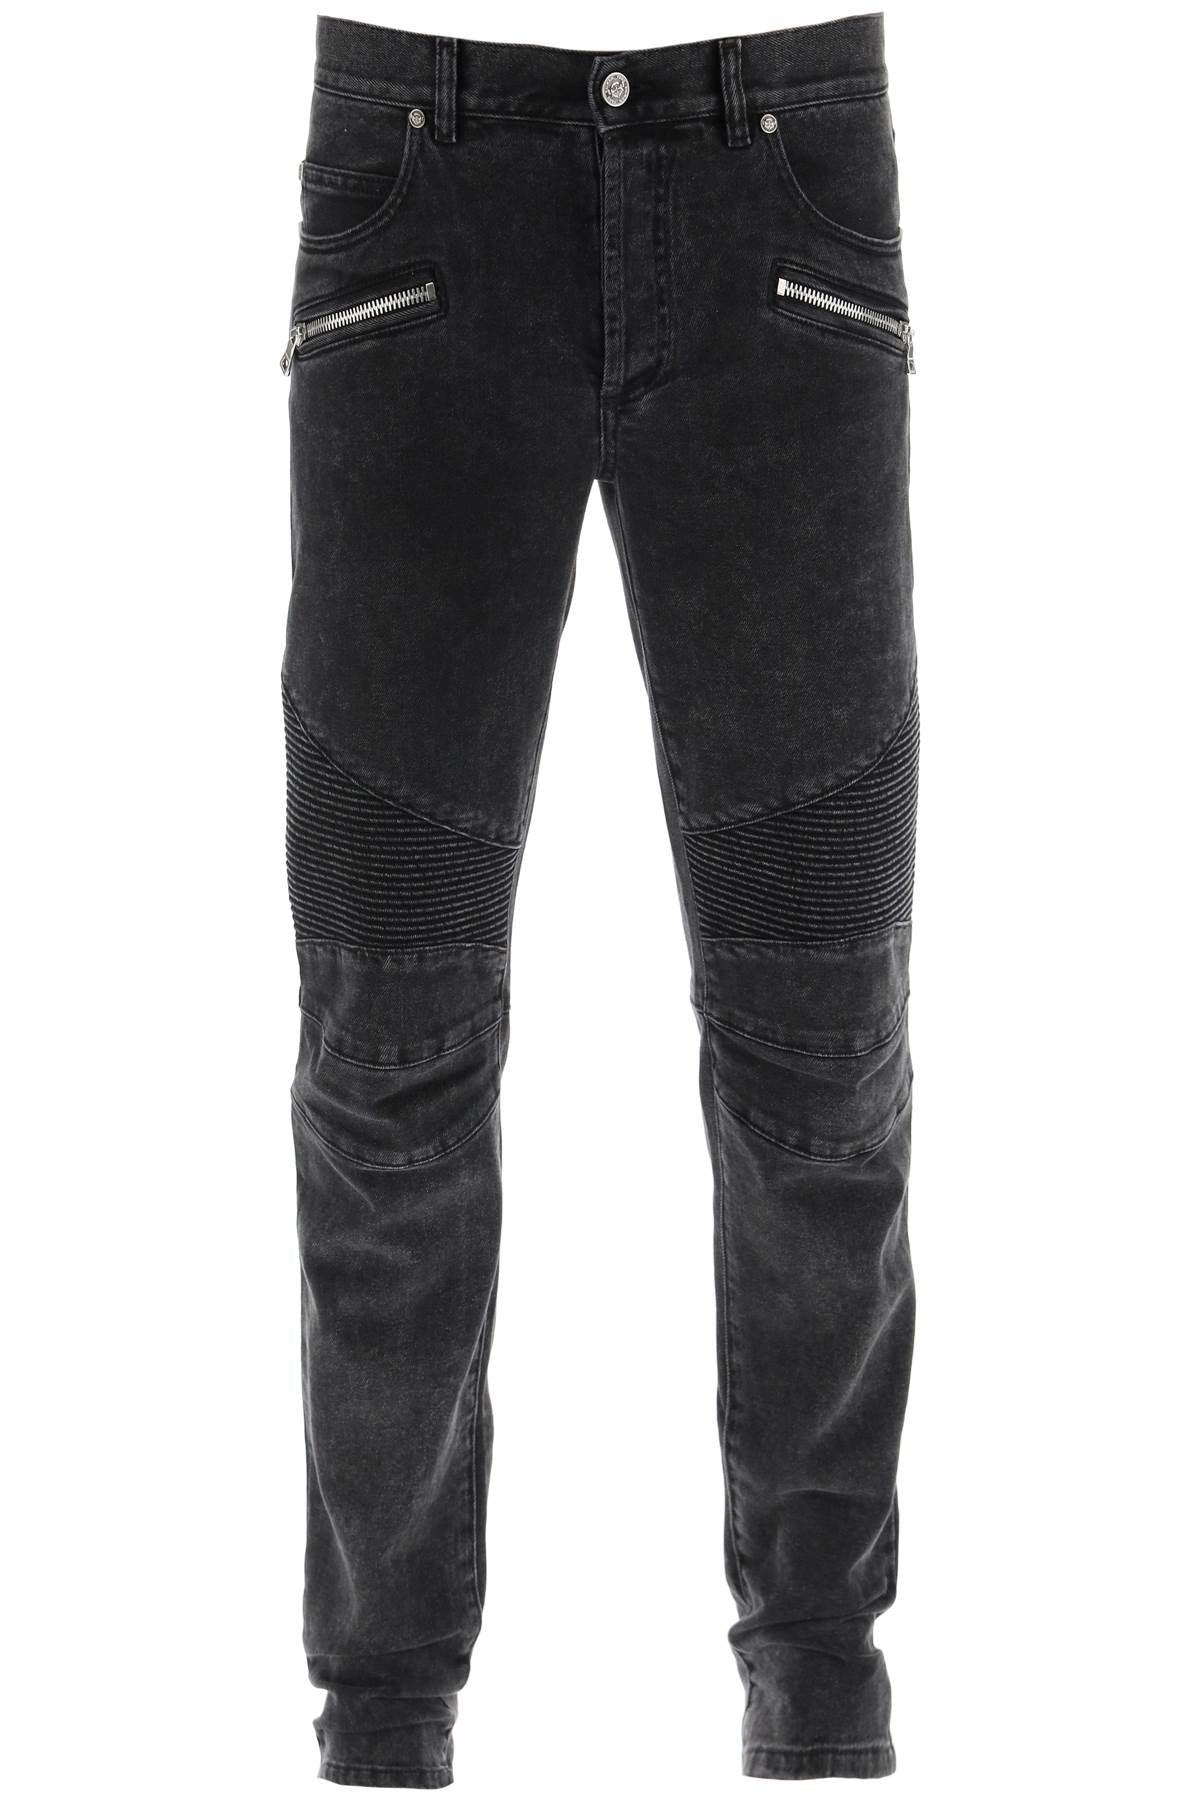 Balmain Tapered Jeans in Black for Men | Lyst